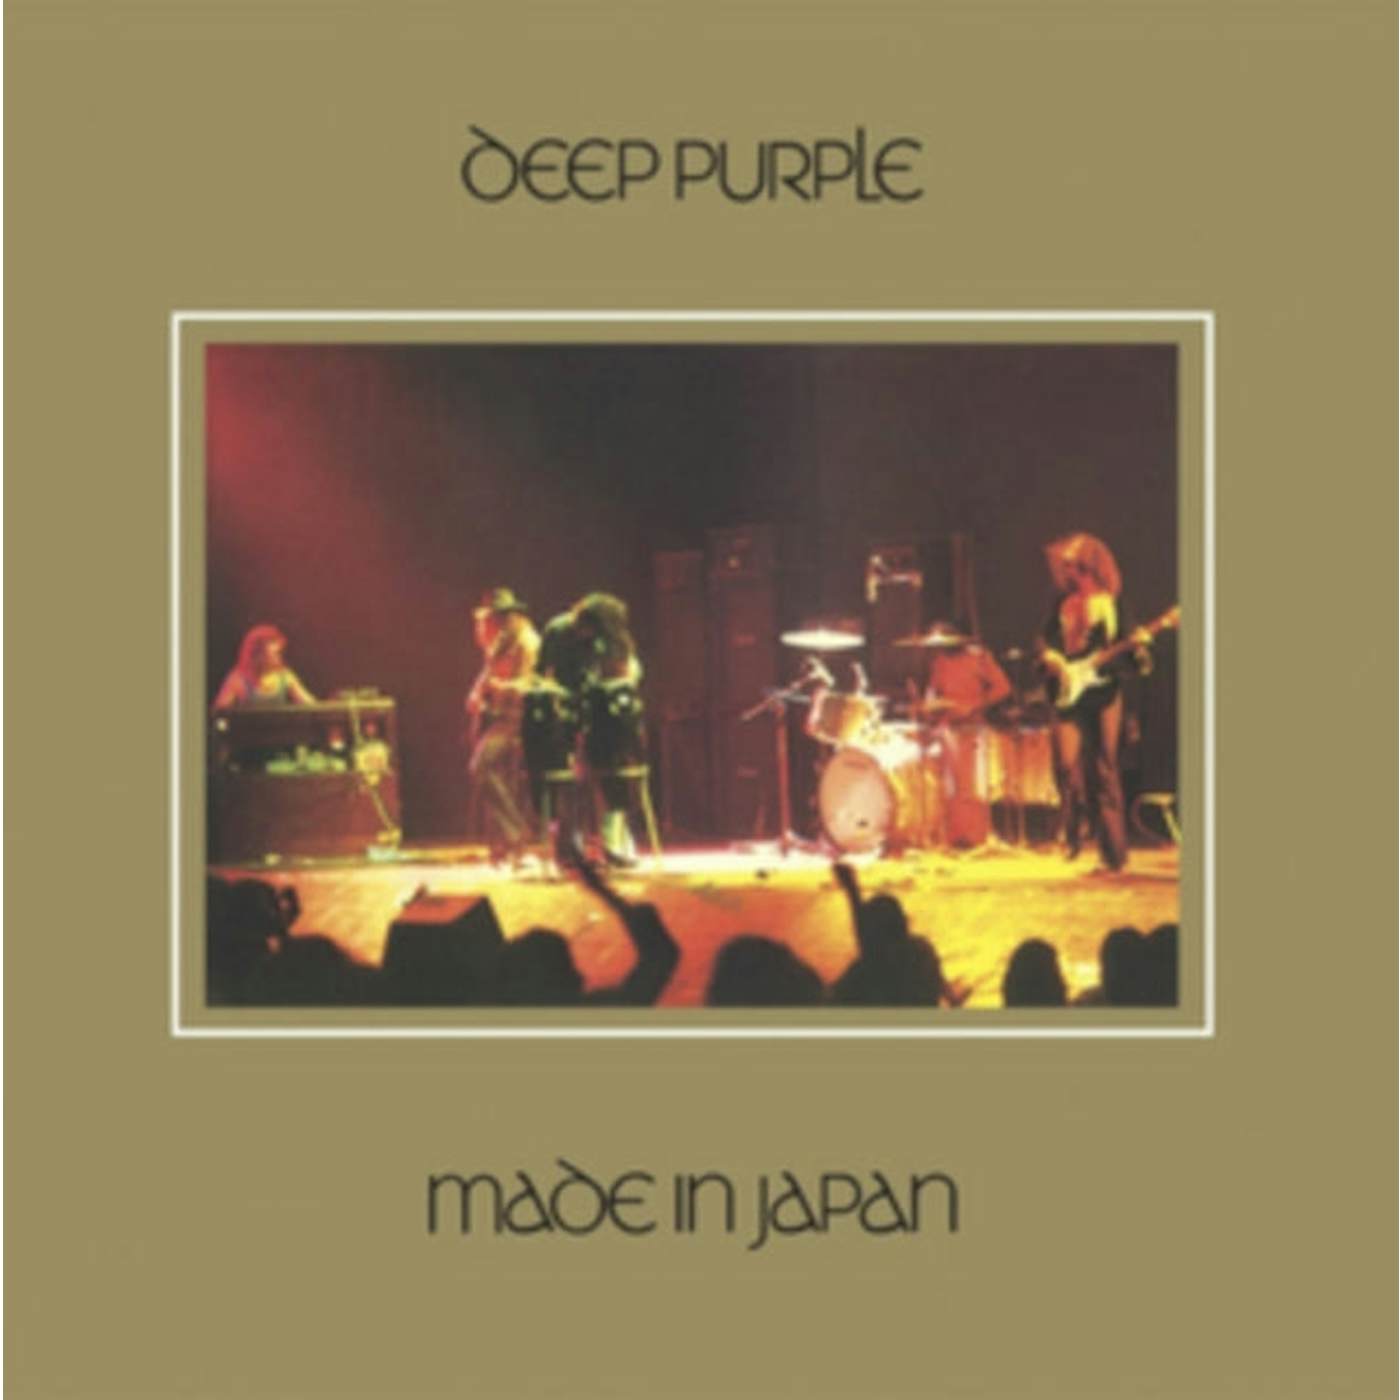 Deep Purple LP Vinyl Record - Made In Japan